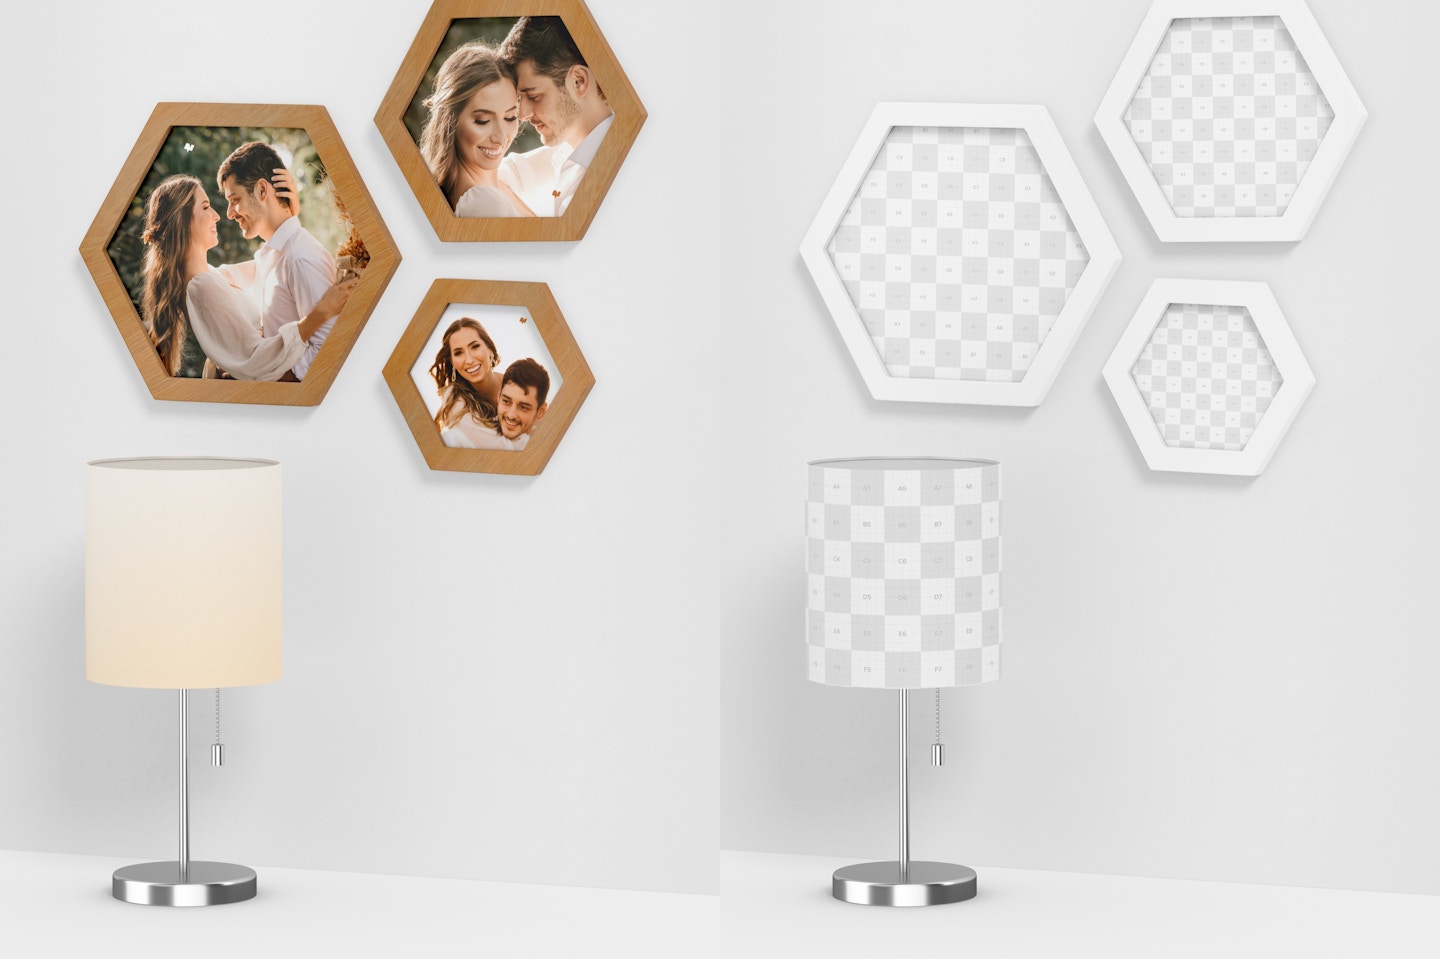 Hexagon Wall Photo Frames with Lamp Mockup